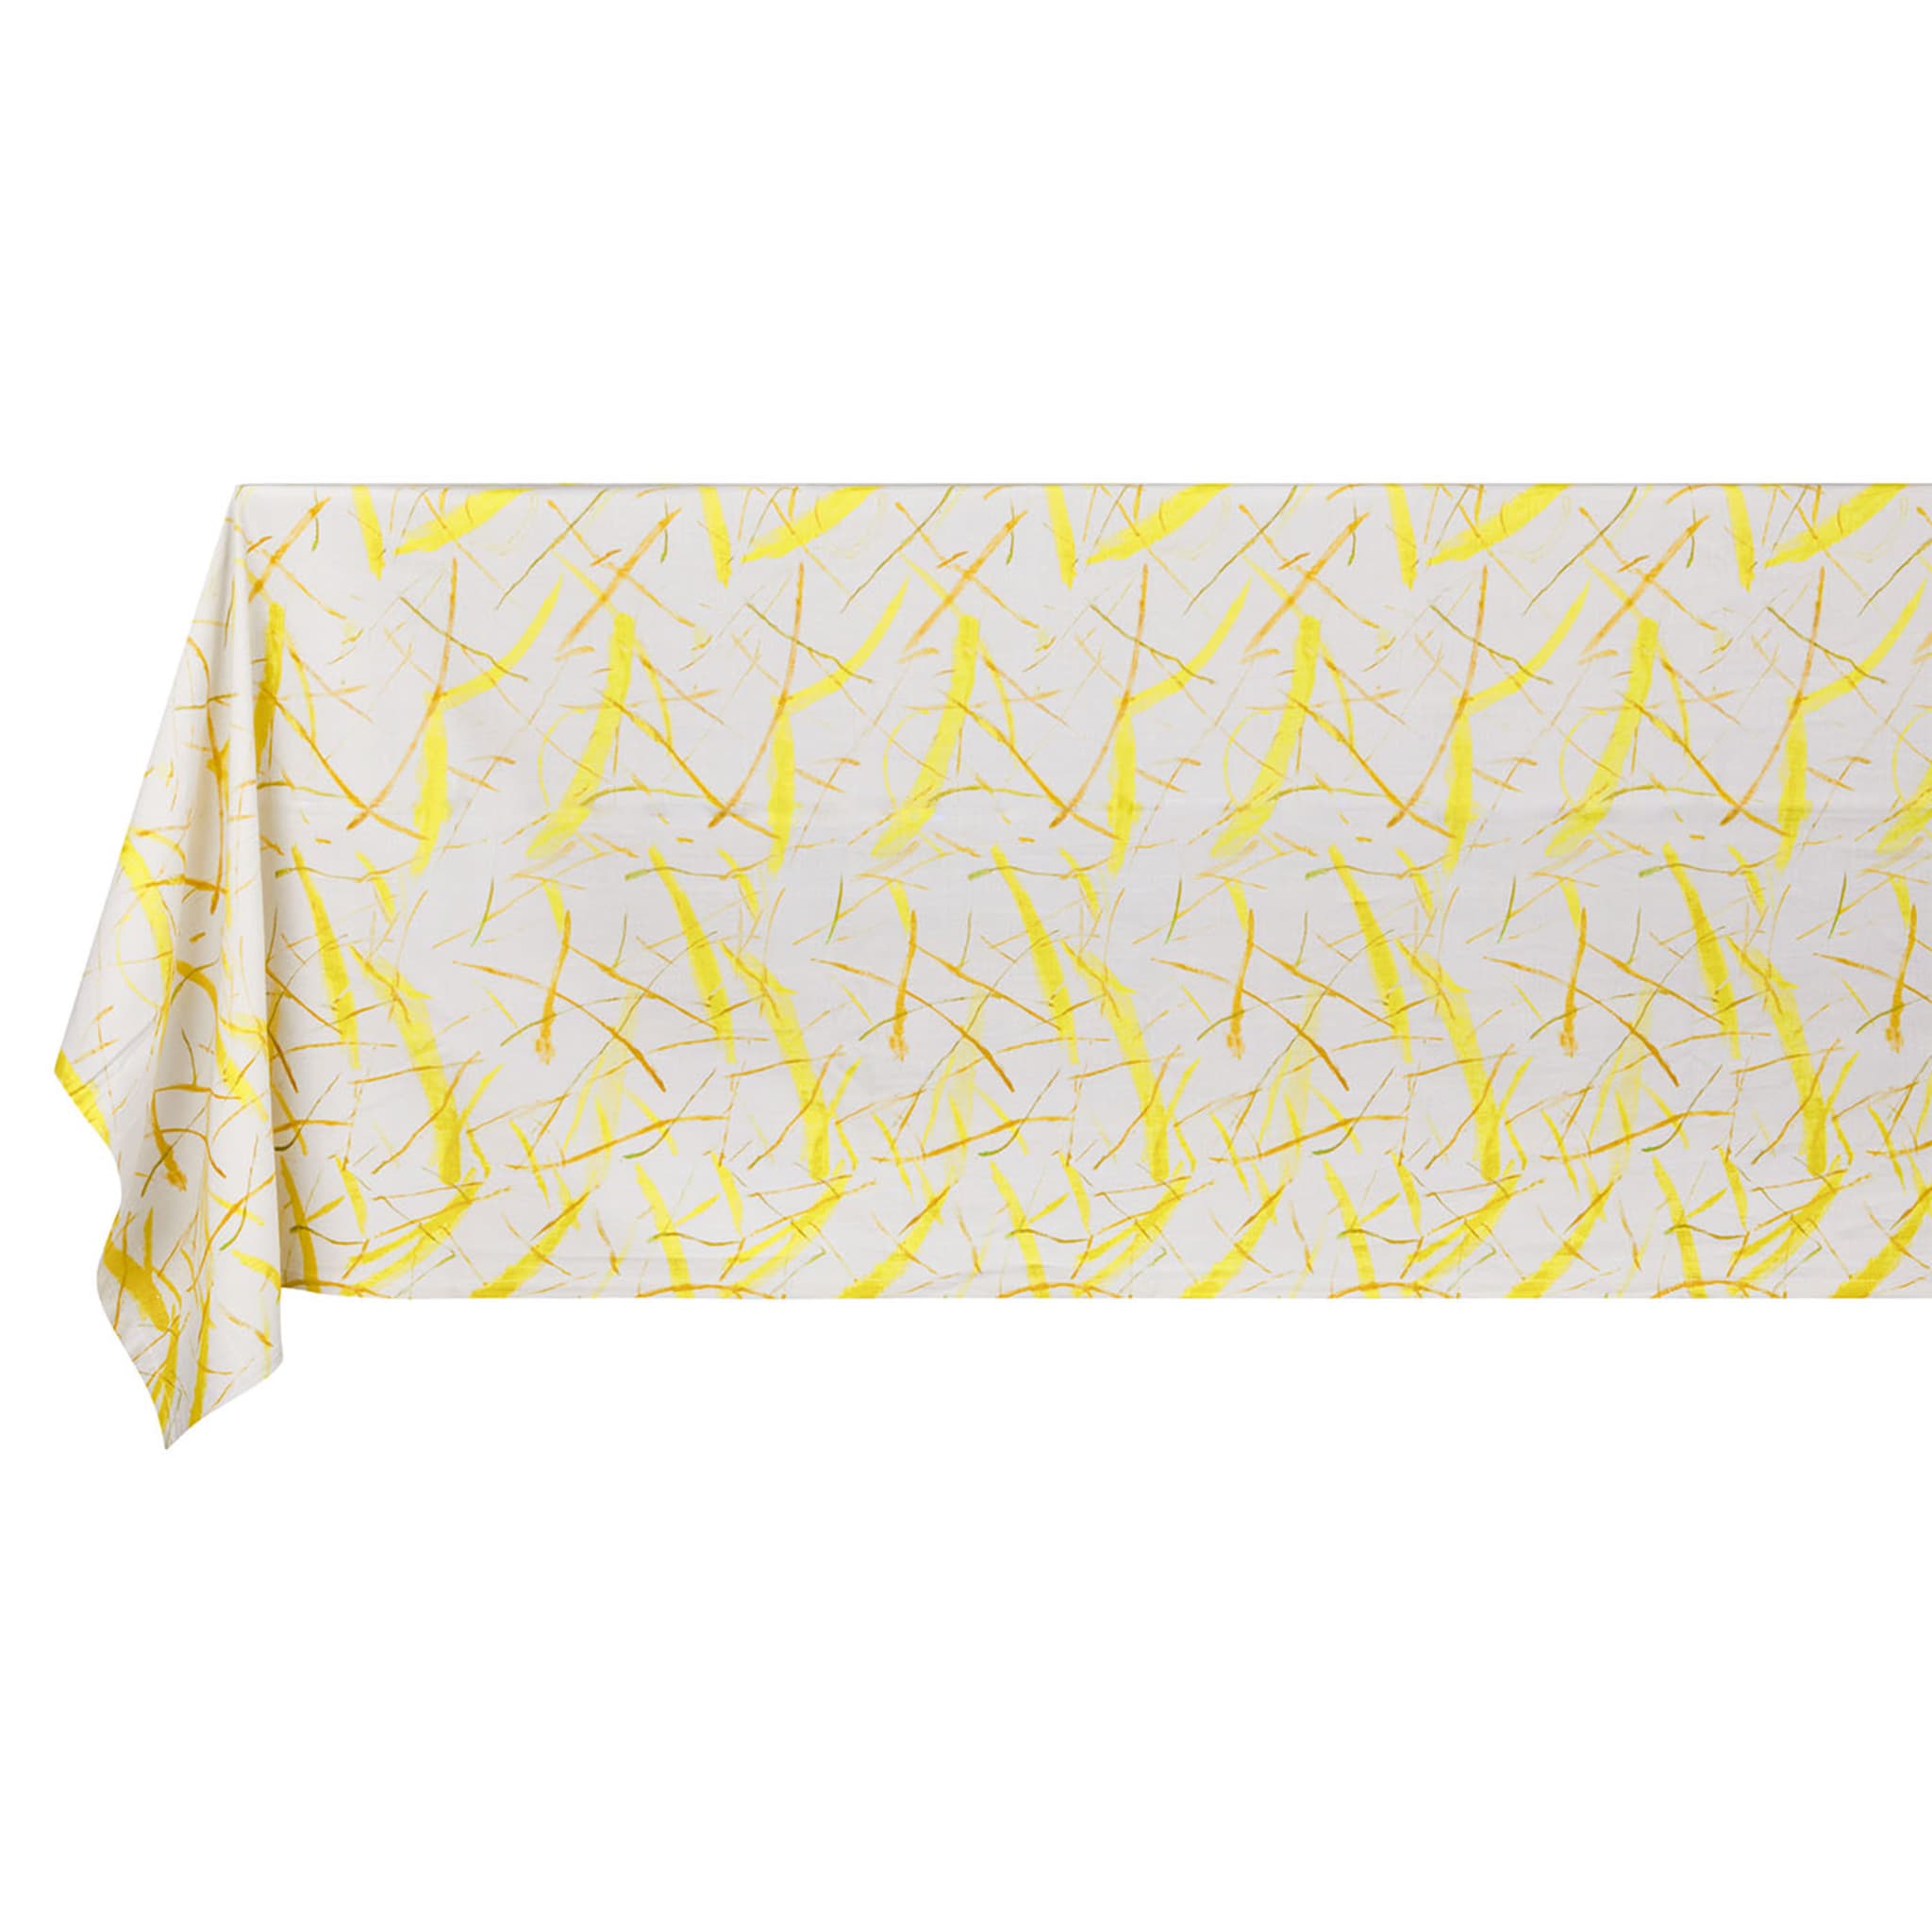 Roman Breeze linen cotton tablecloth - Alternative view 1